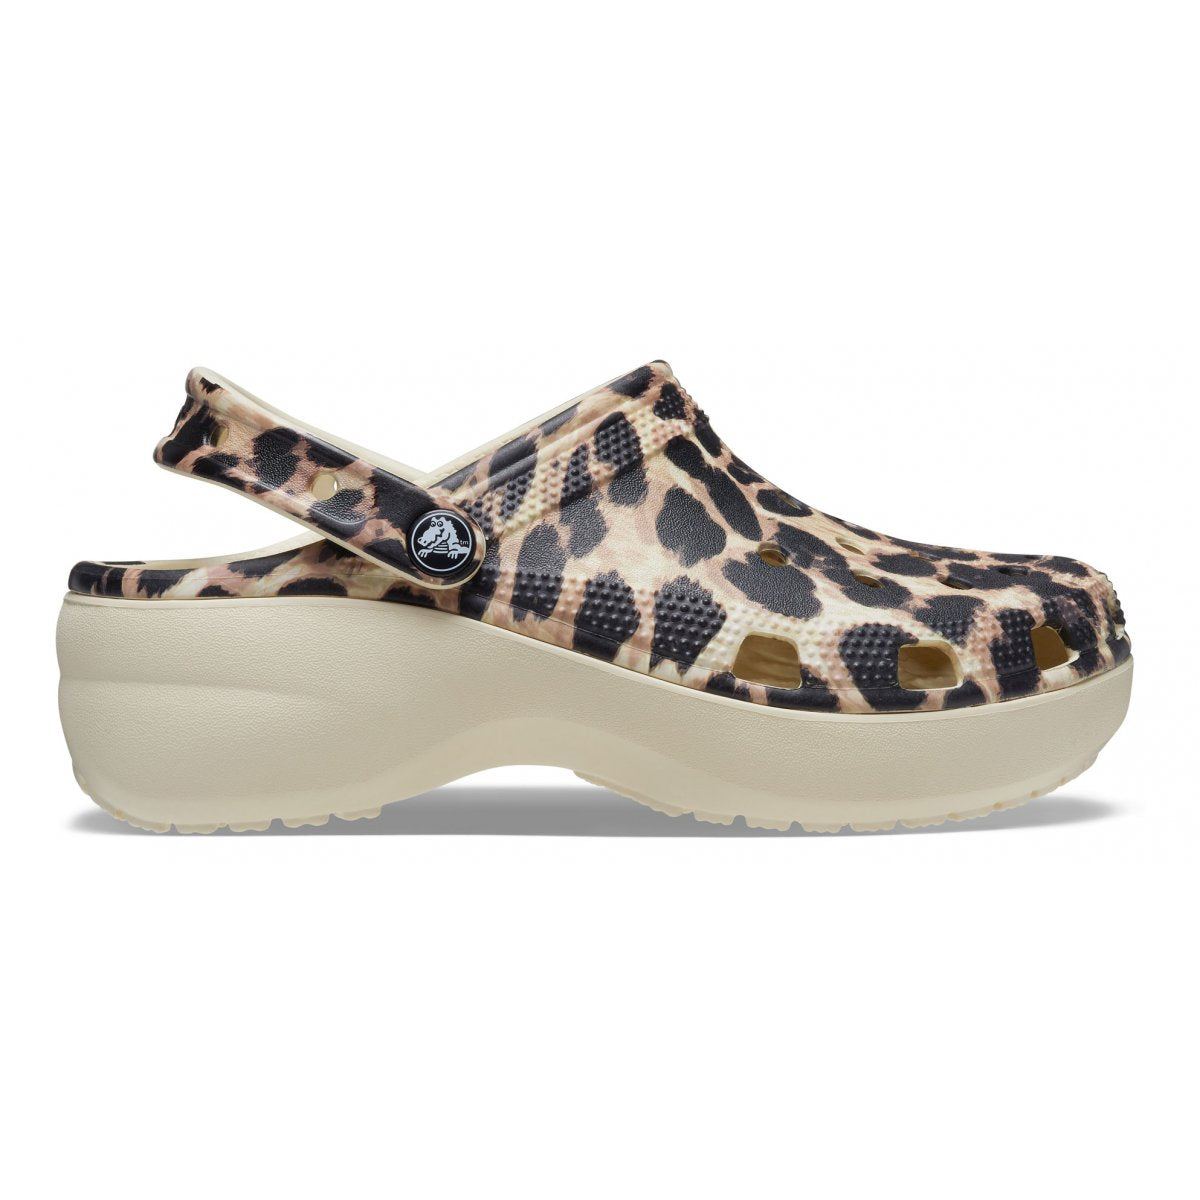 Urban Shoes Crocs Animal